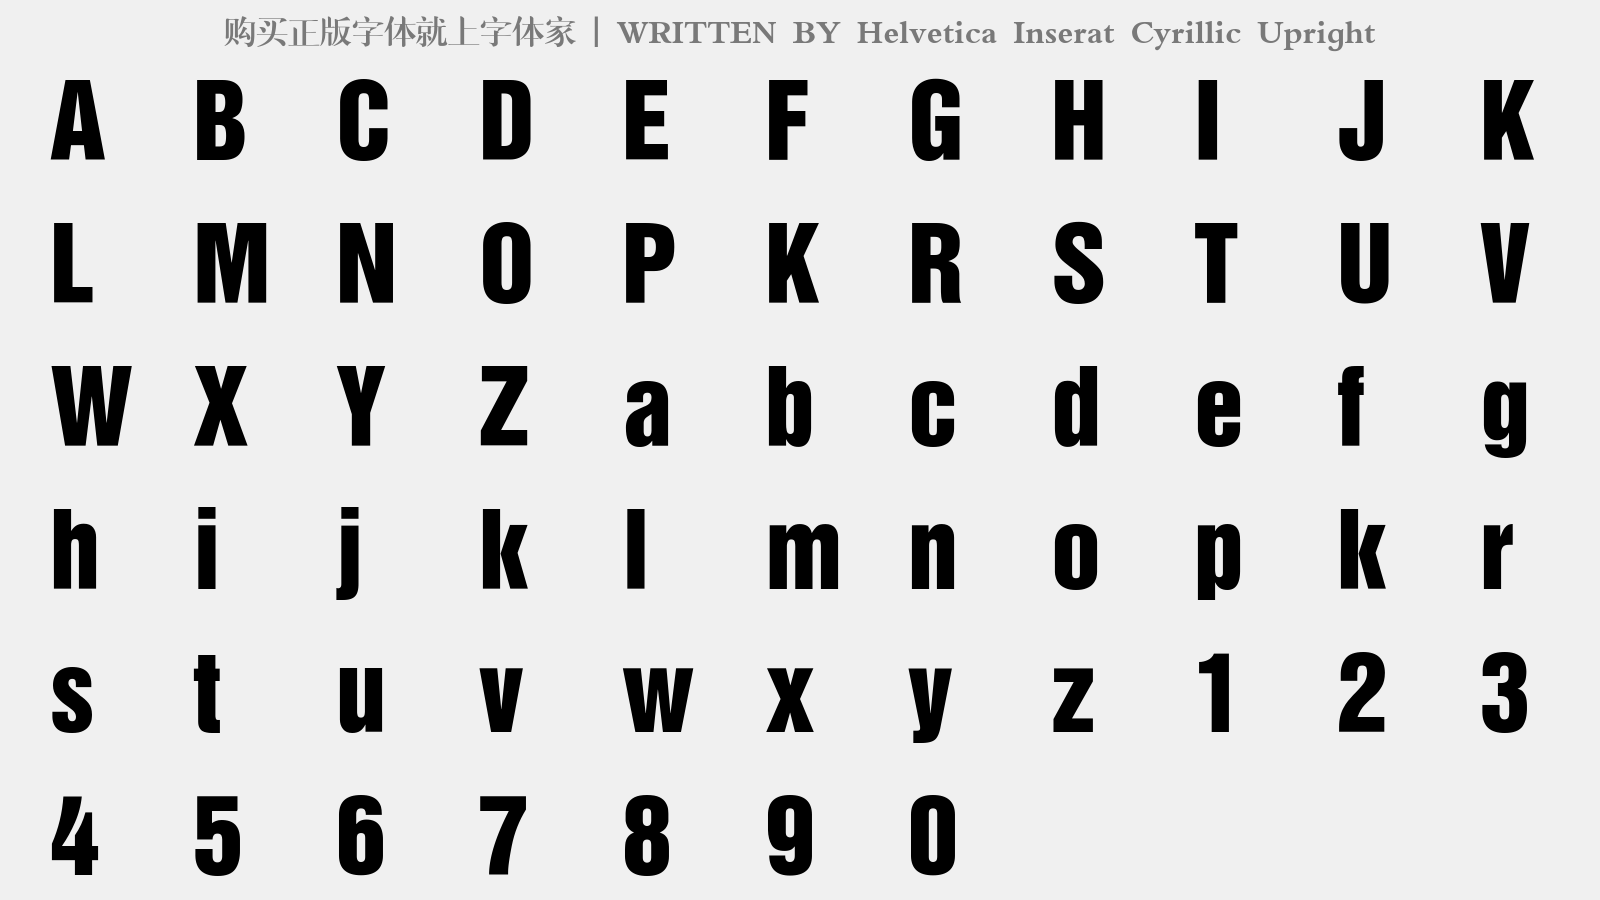 Helvetica Inserat Cyrillic Upright - 大写字母/小写字母/数字